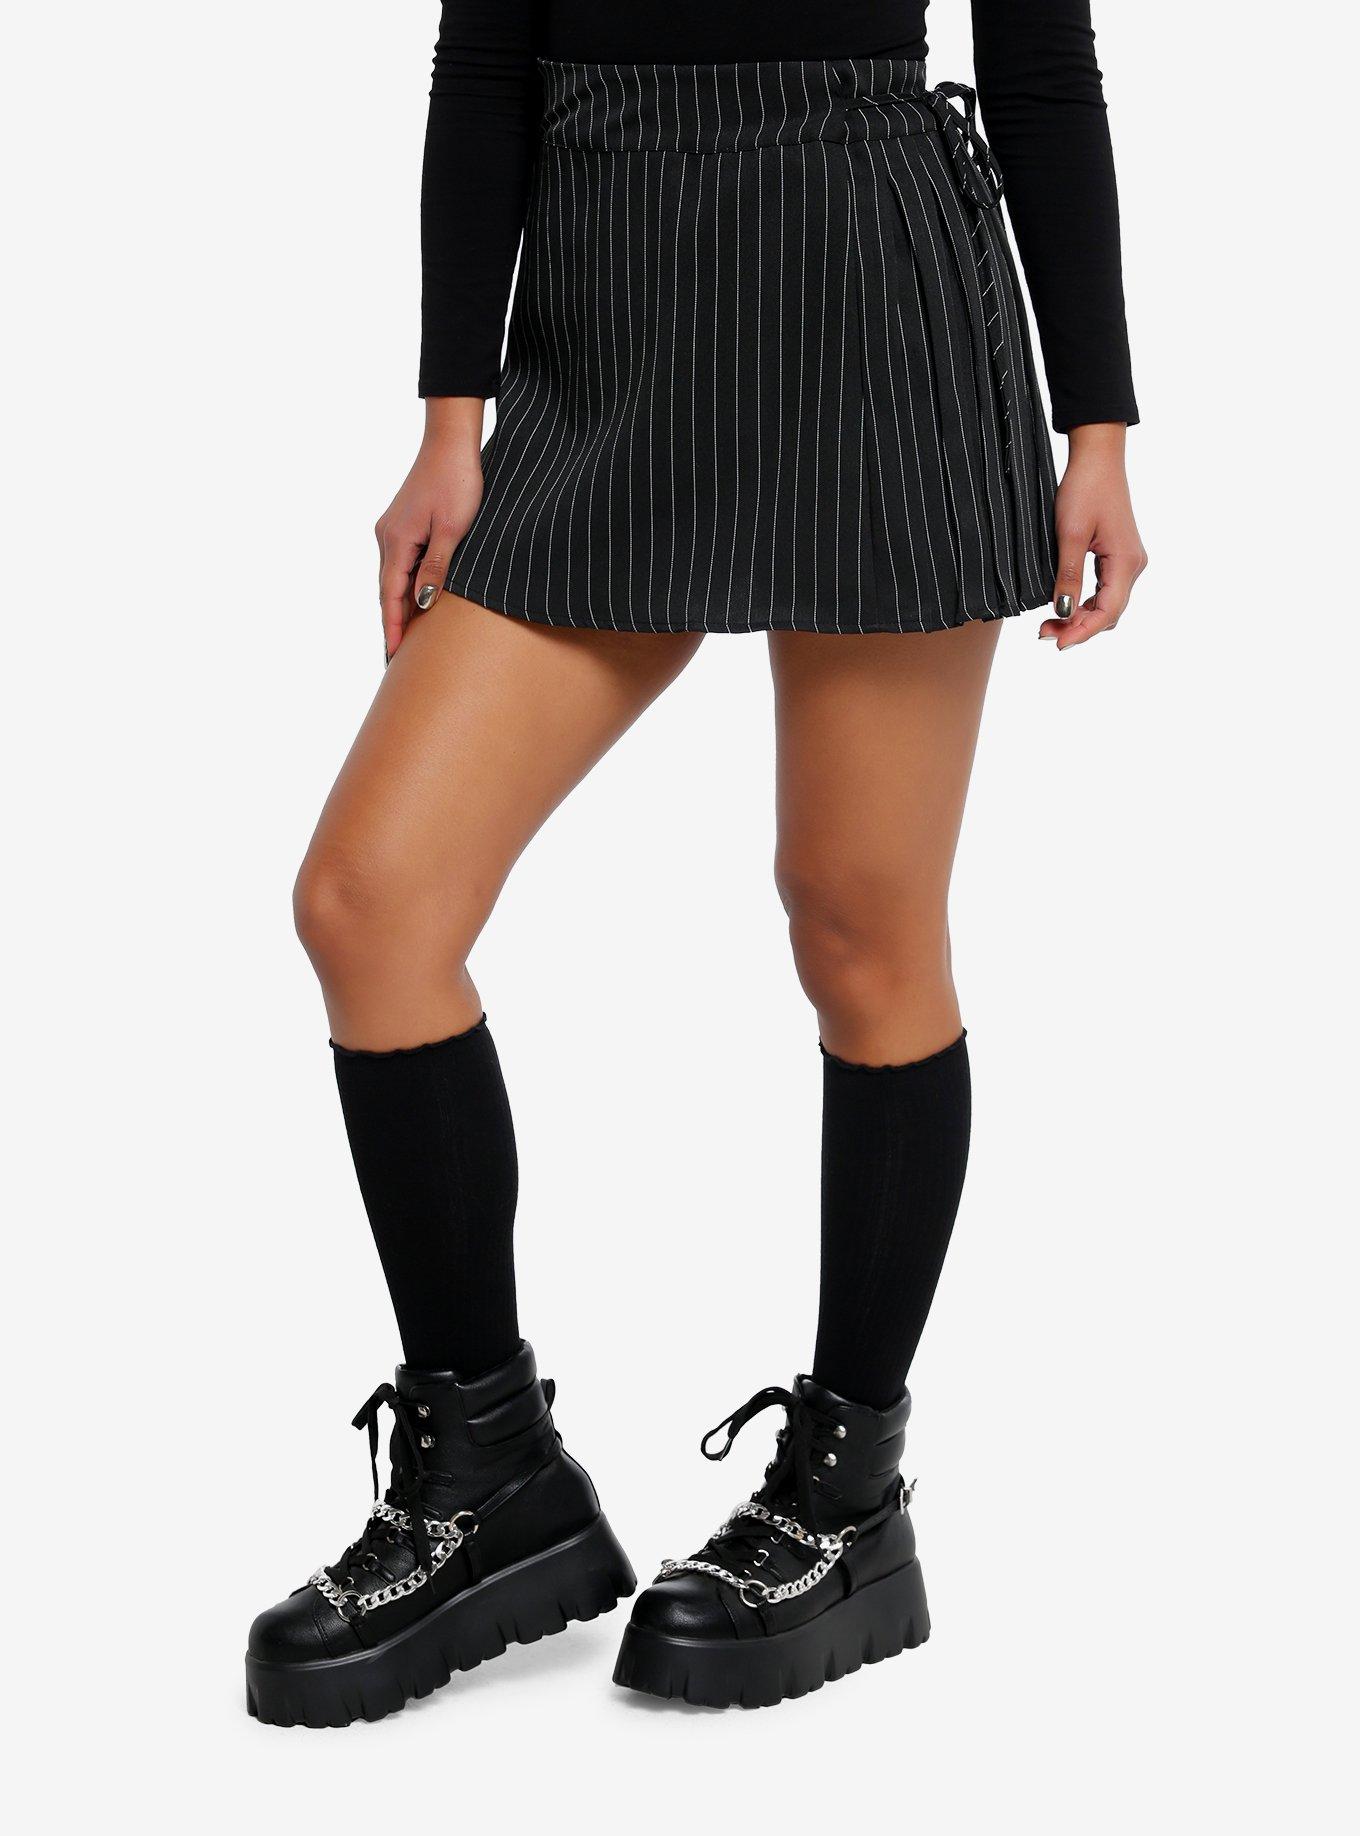 Daisy Street Black Pinstripe Side-Tie Mini Skirt